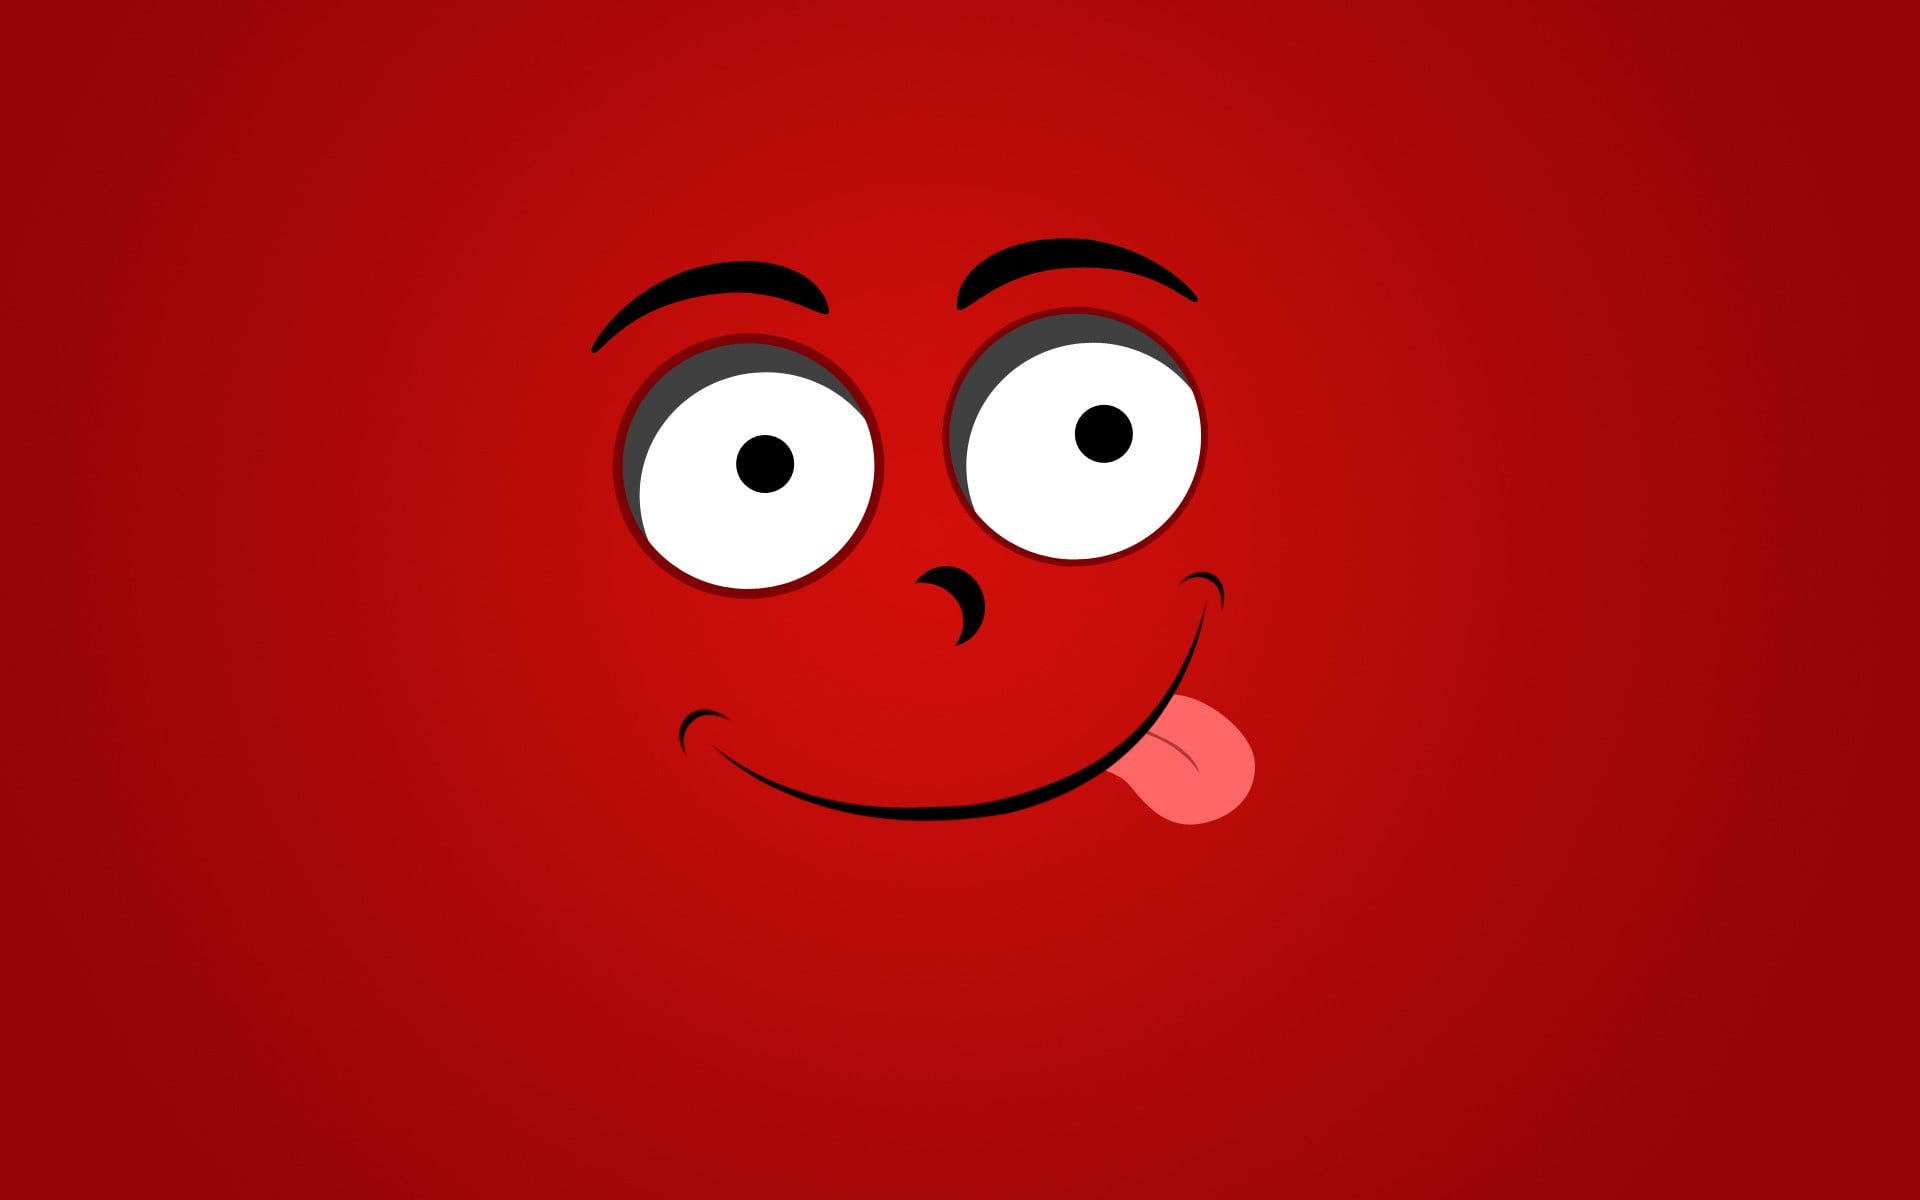 red emoticon clip-art, minimalism, anthropomorphic smiley face